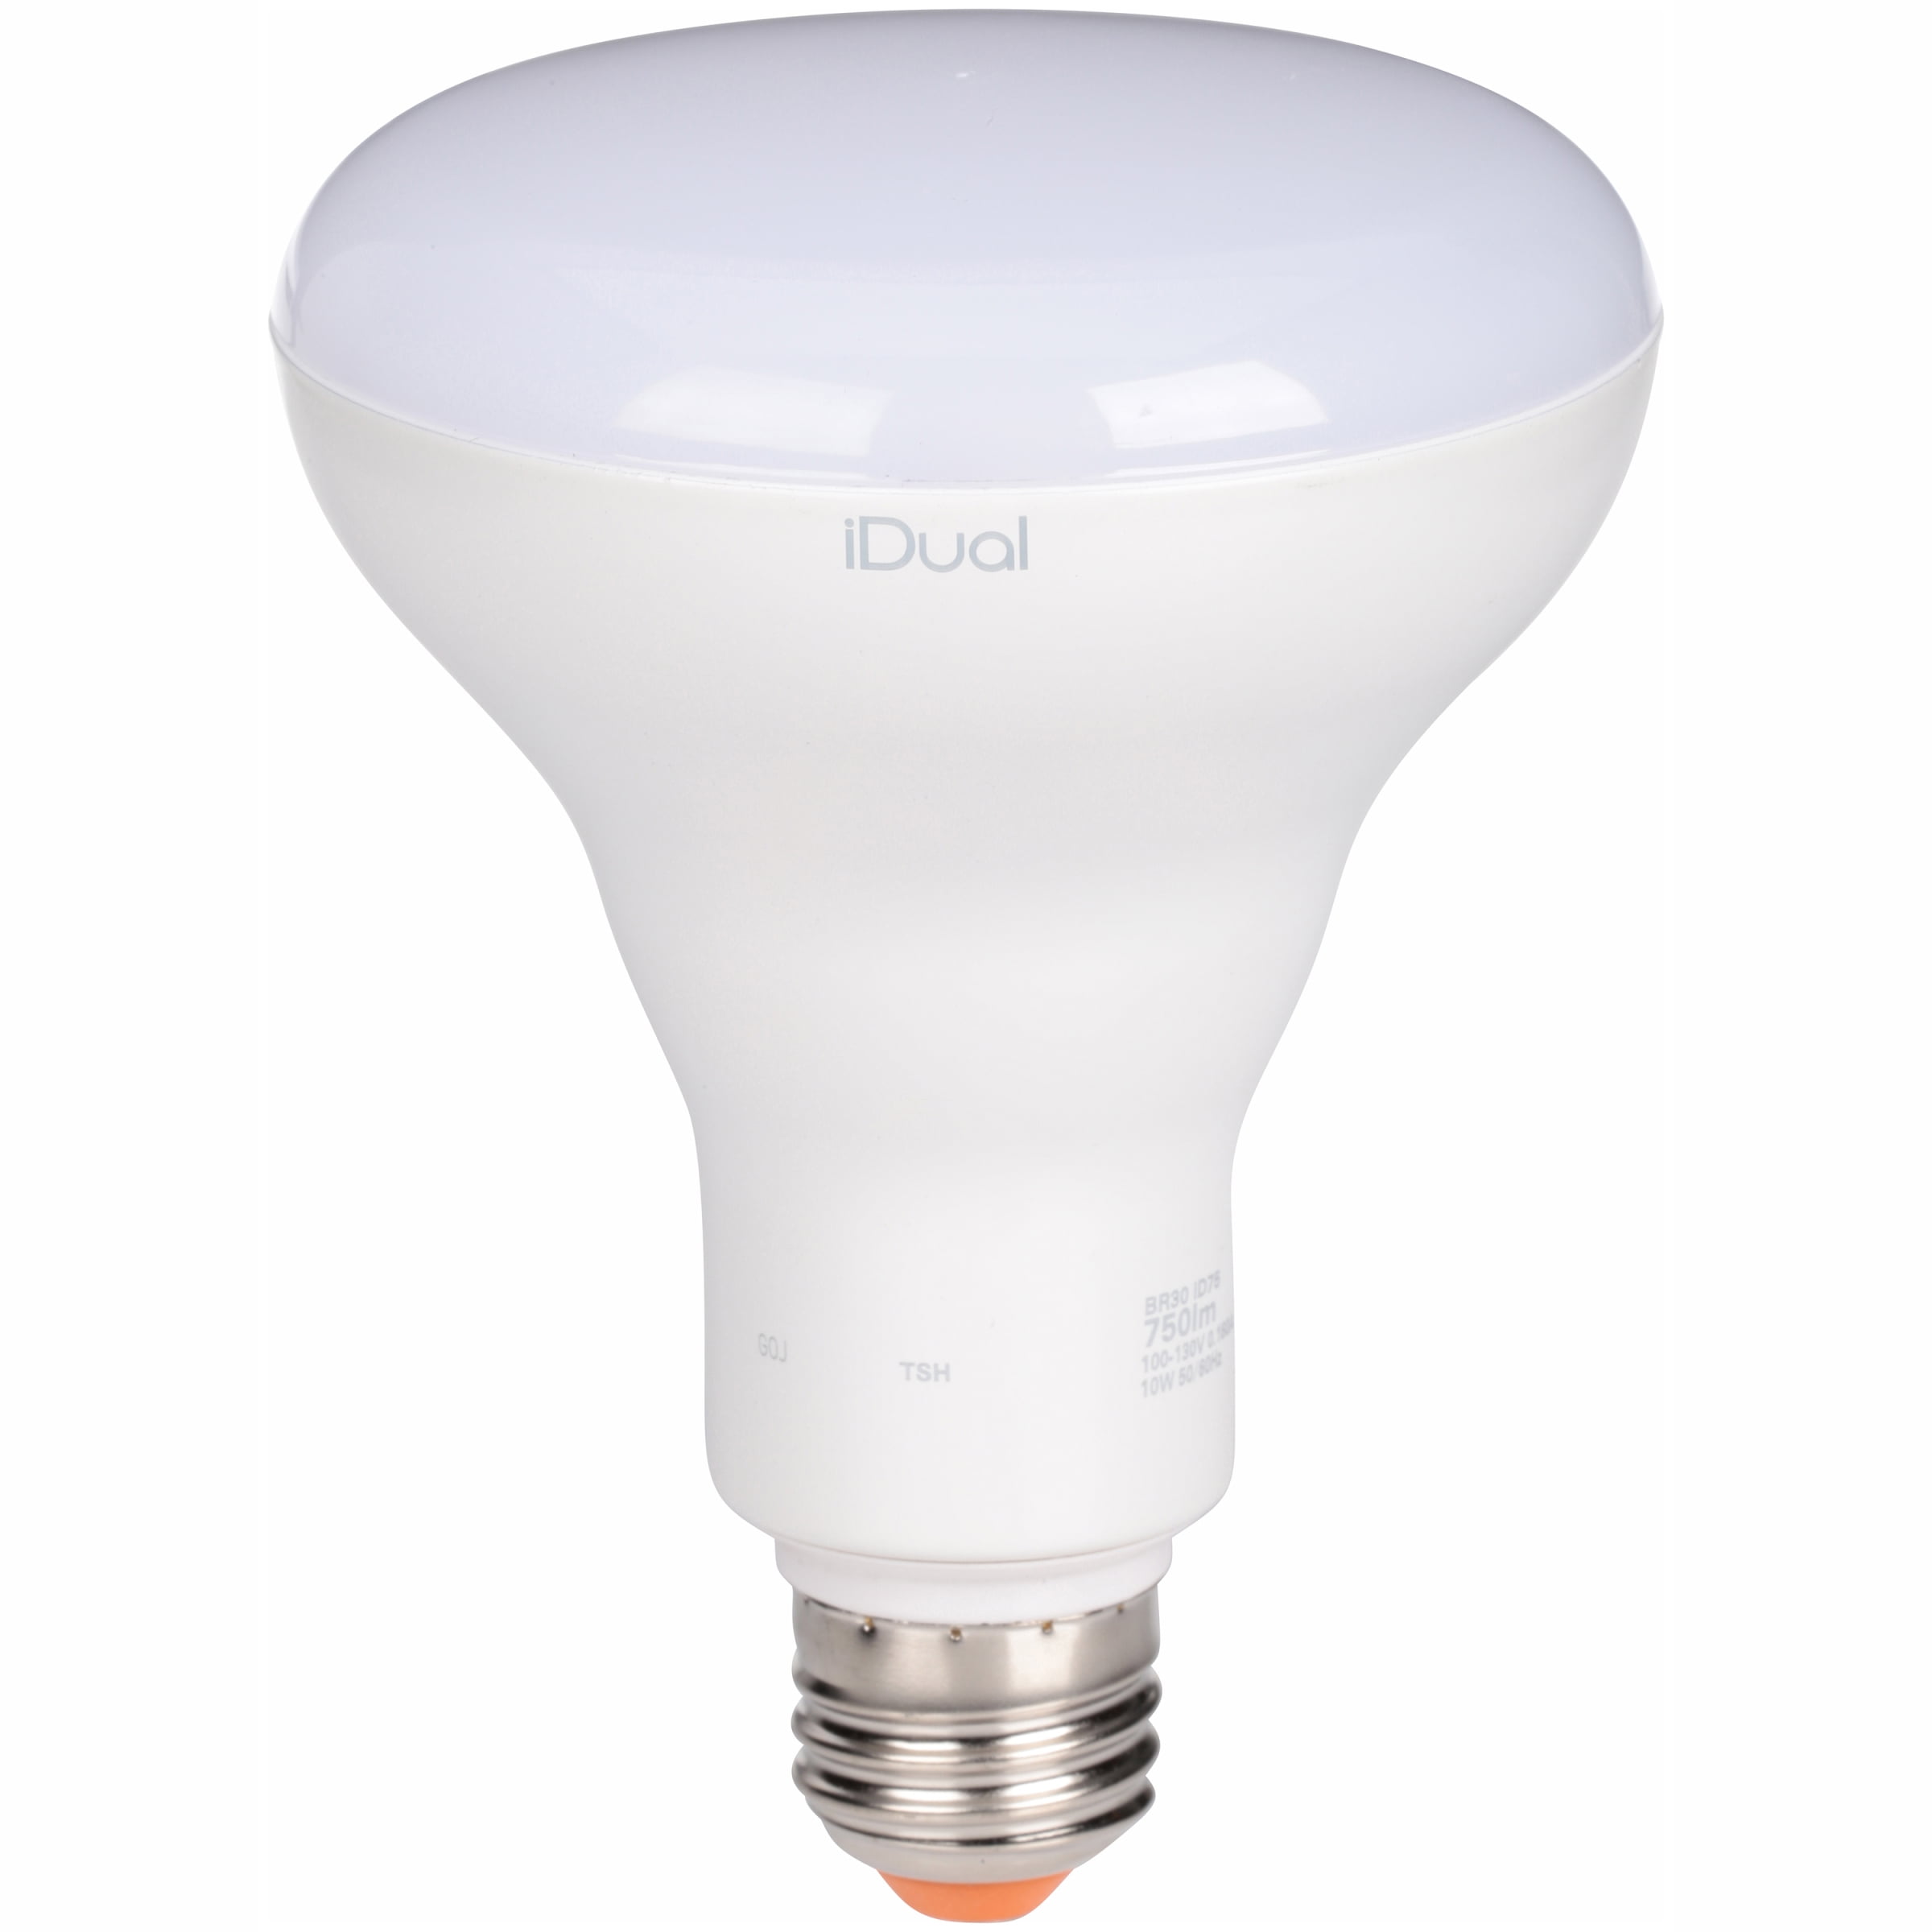 iDual® Light Bulb Walmart.com